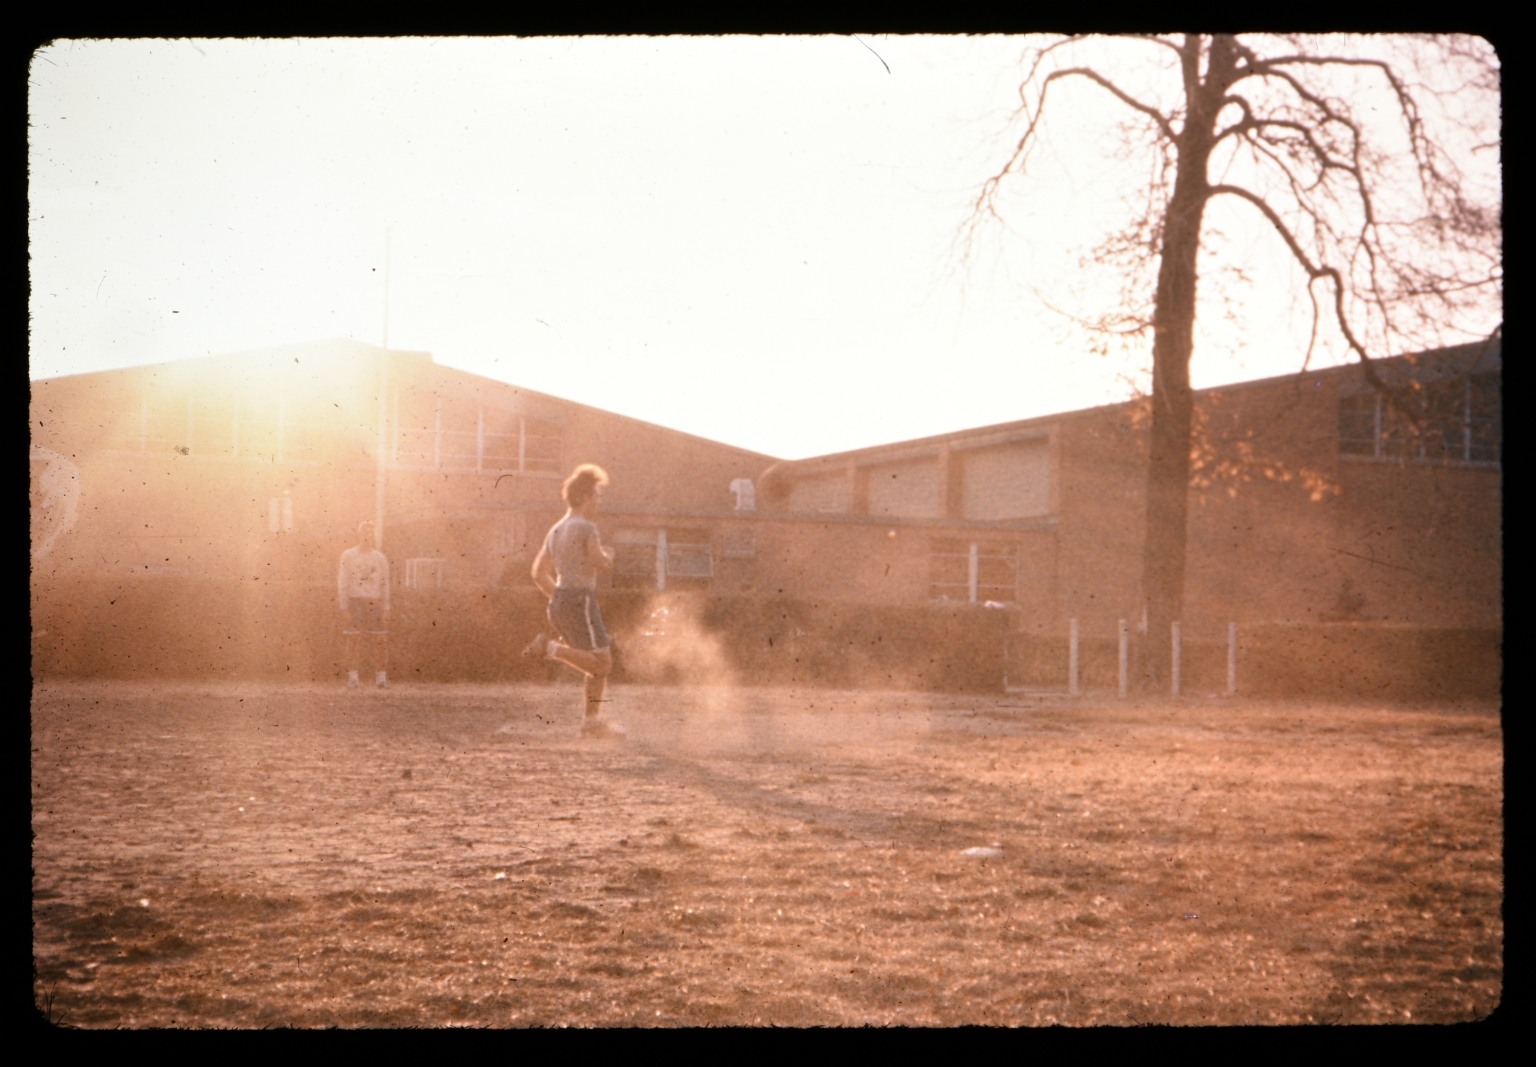 Unidentified person runs in a dusty yard